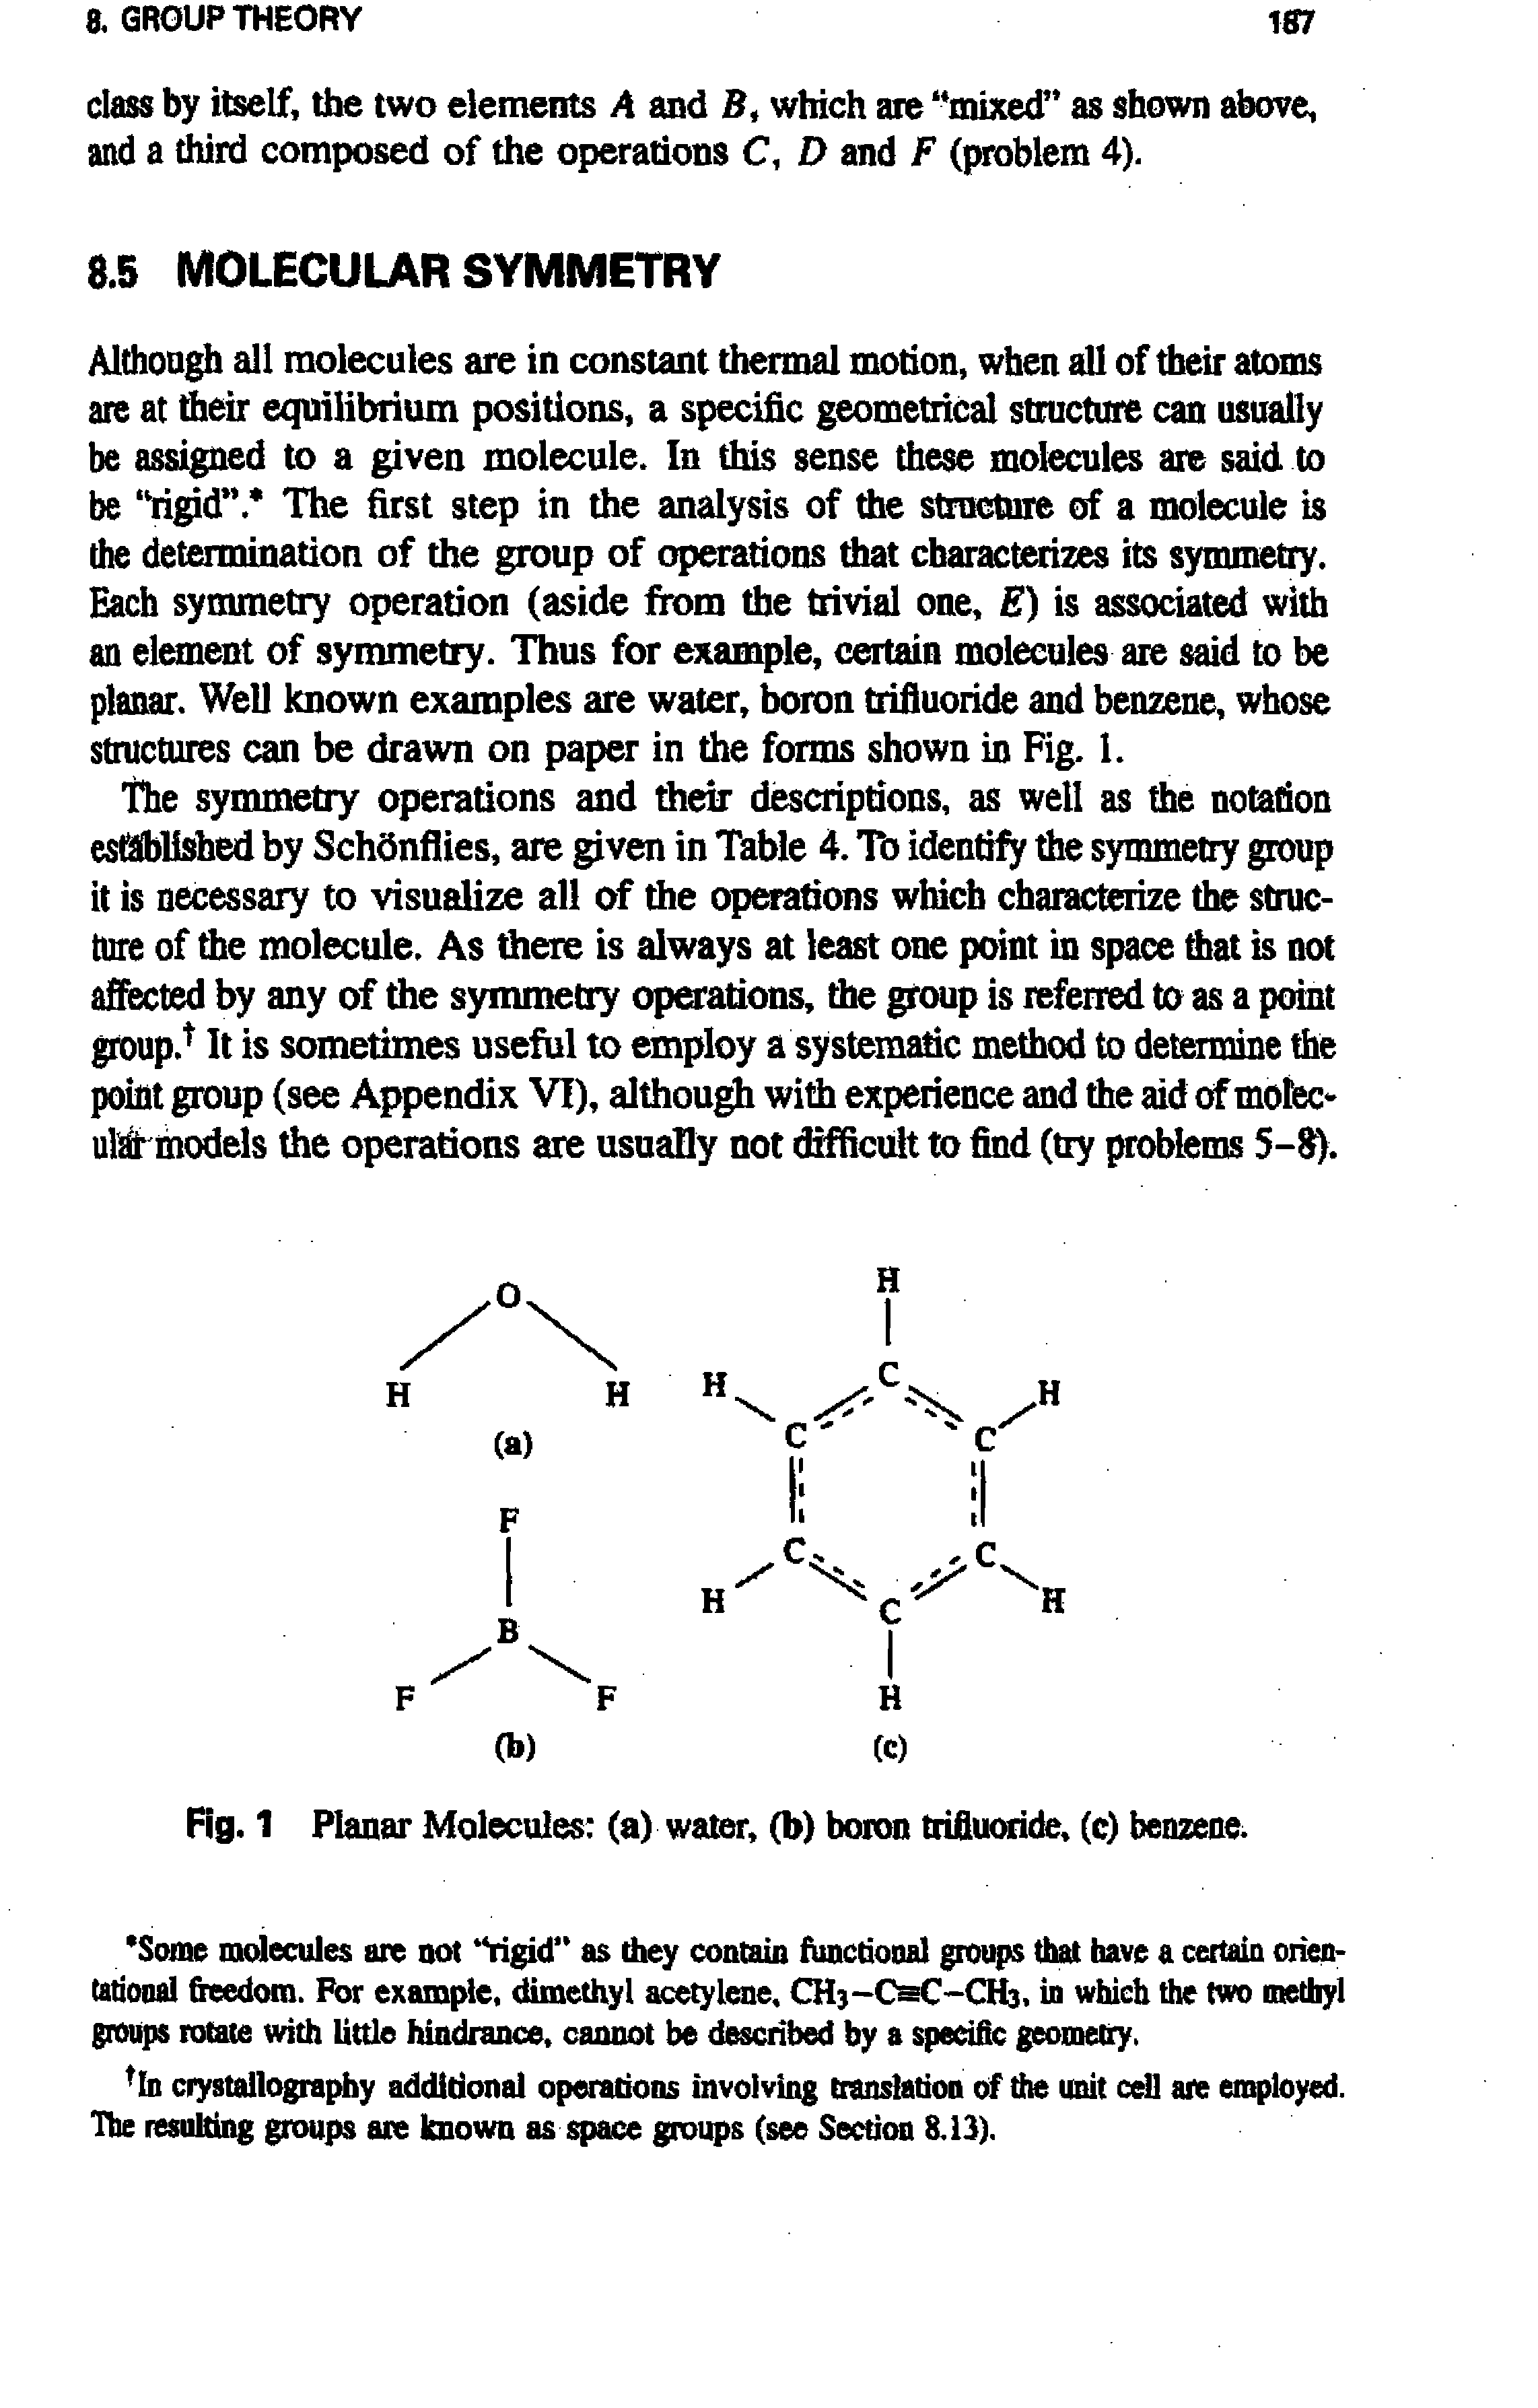 Fig. 1 Planar Molecules (a) water, (b) boron trifluoride, (c) benzene.